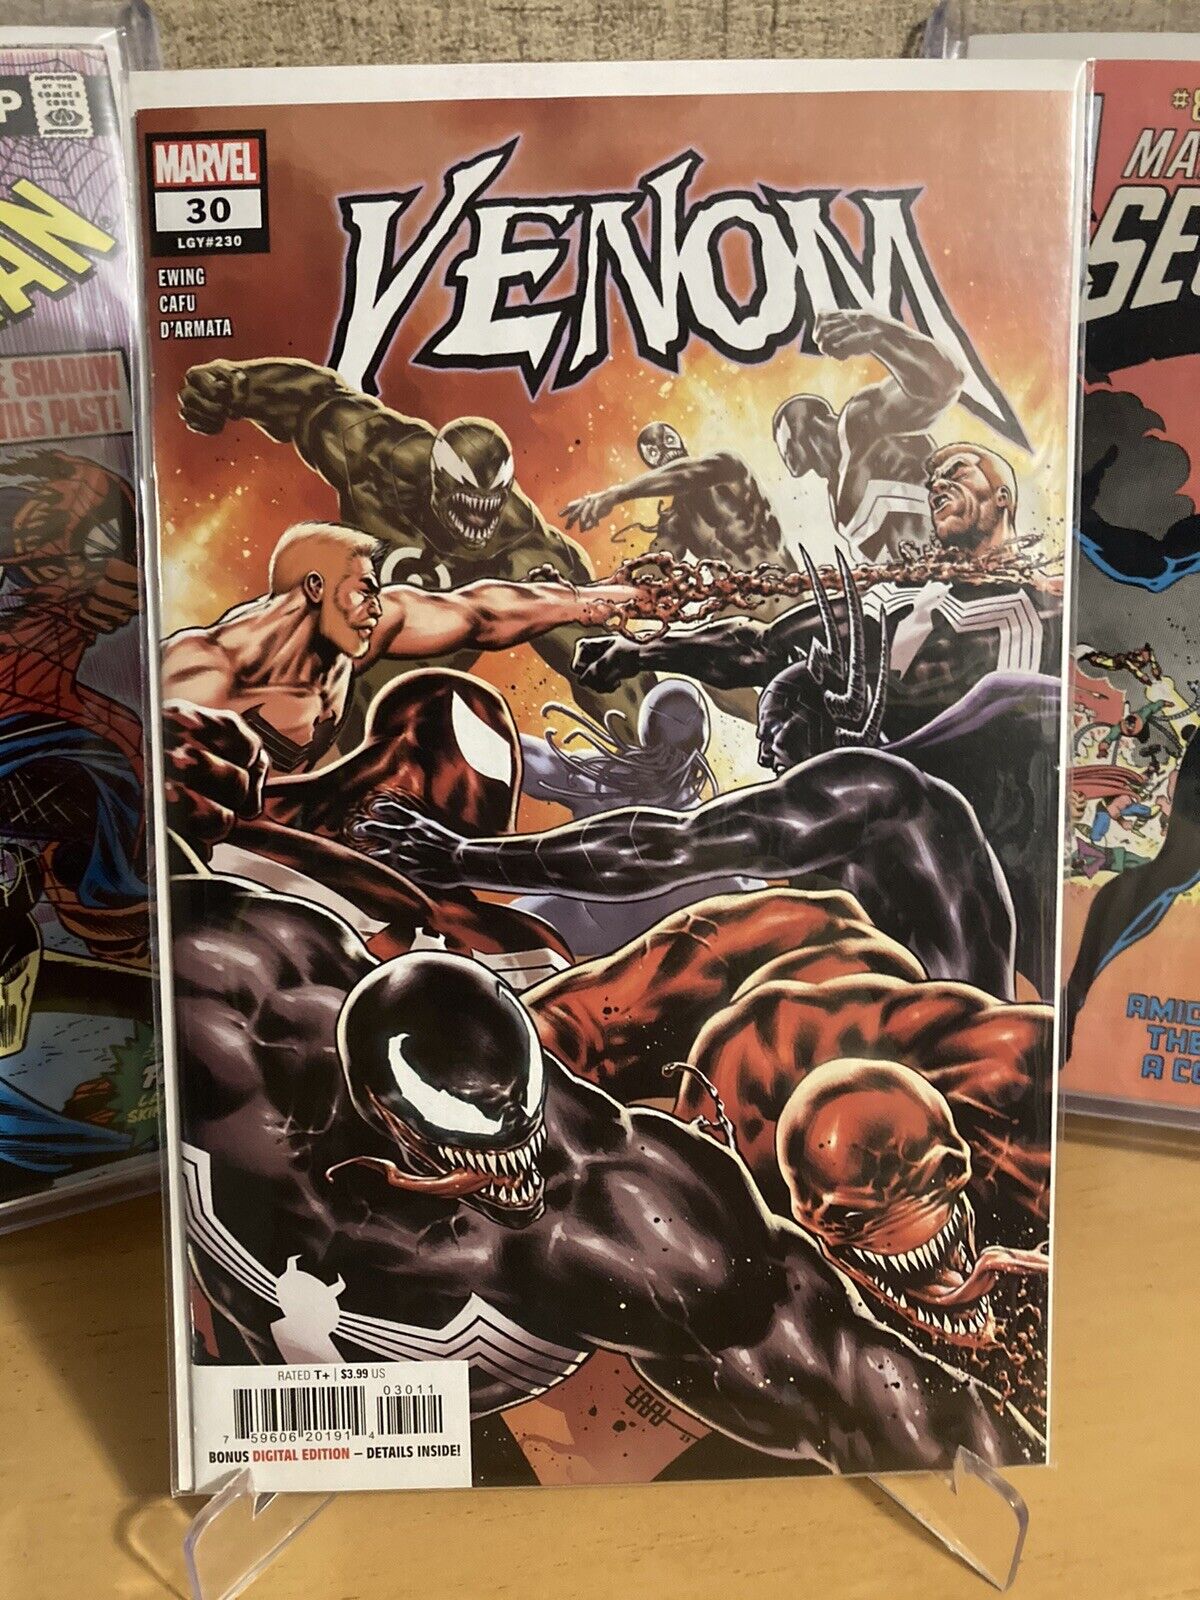 Venom #30 (230) (Marvel Comics)